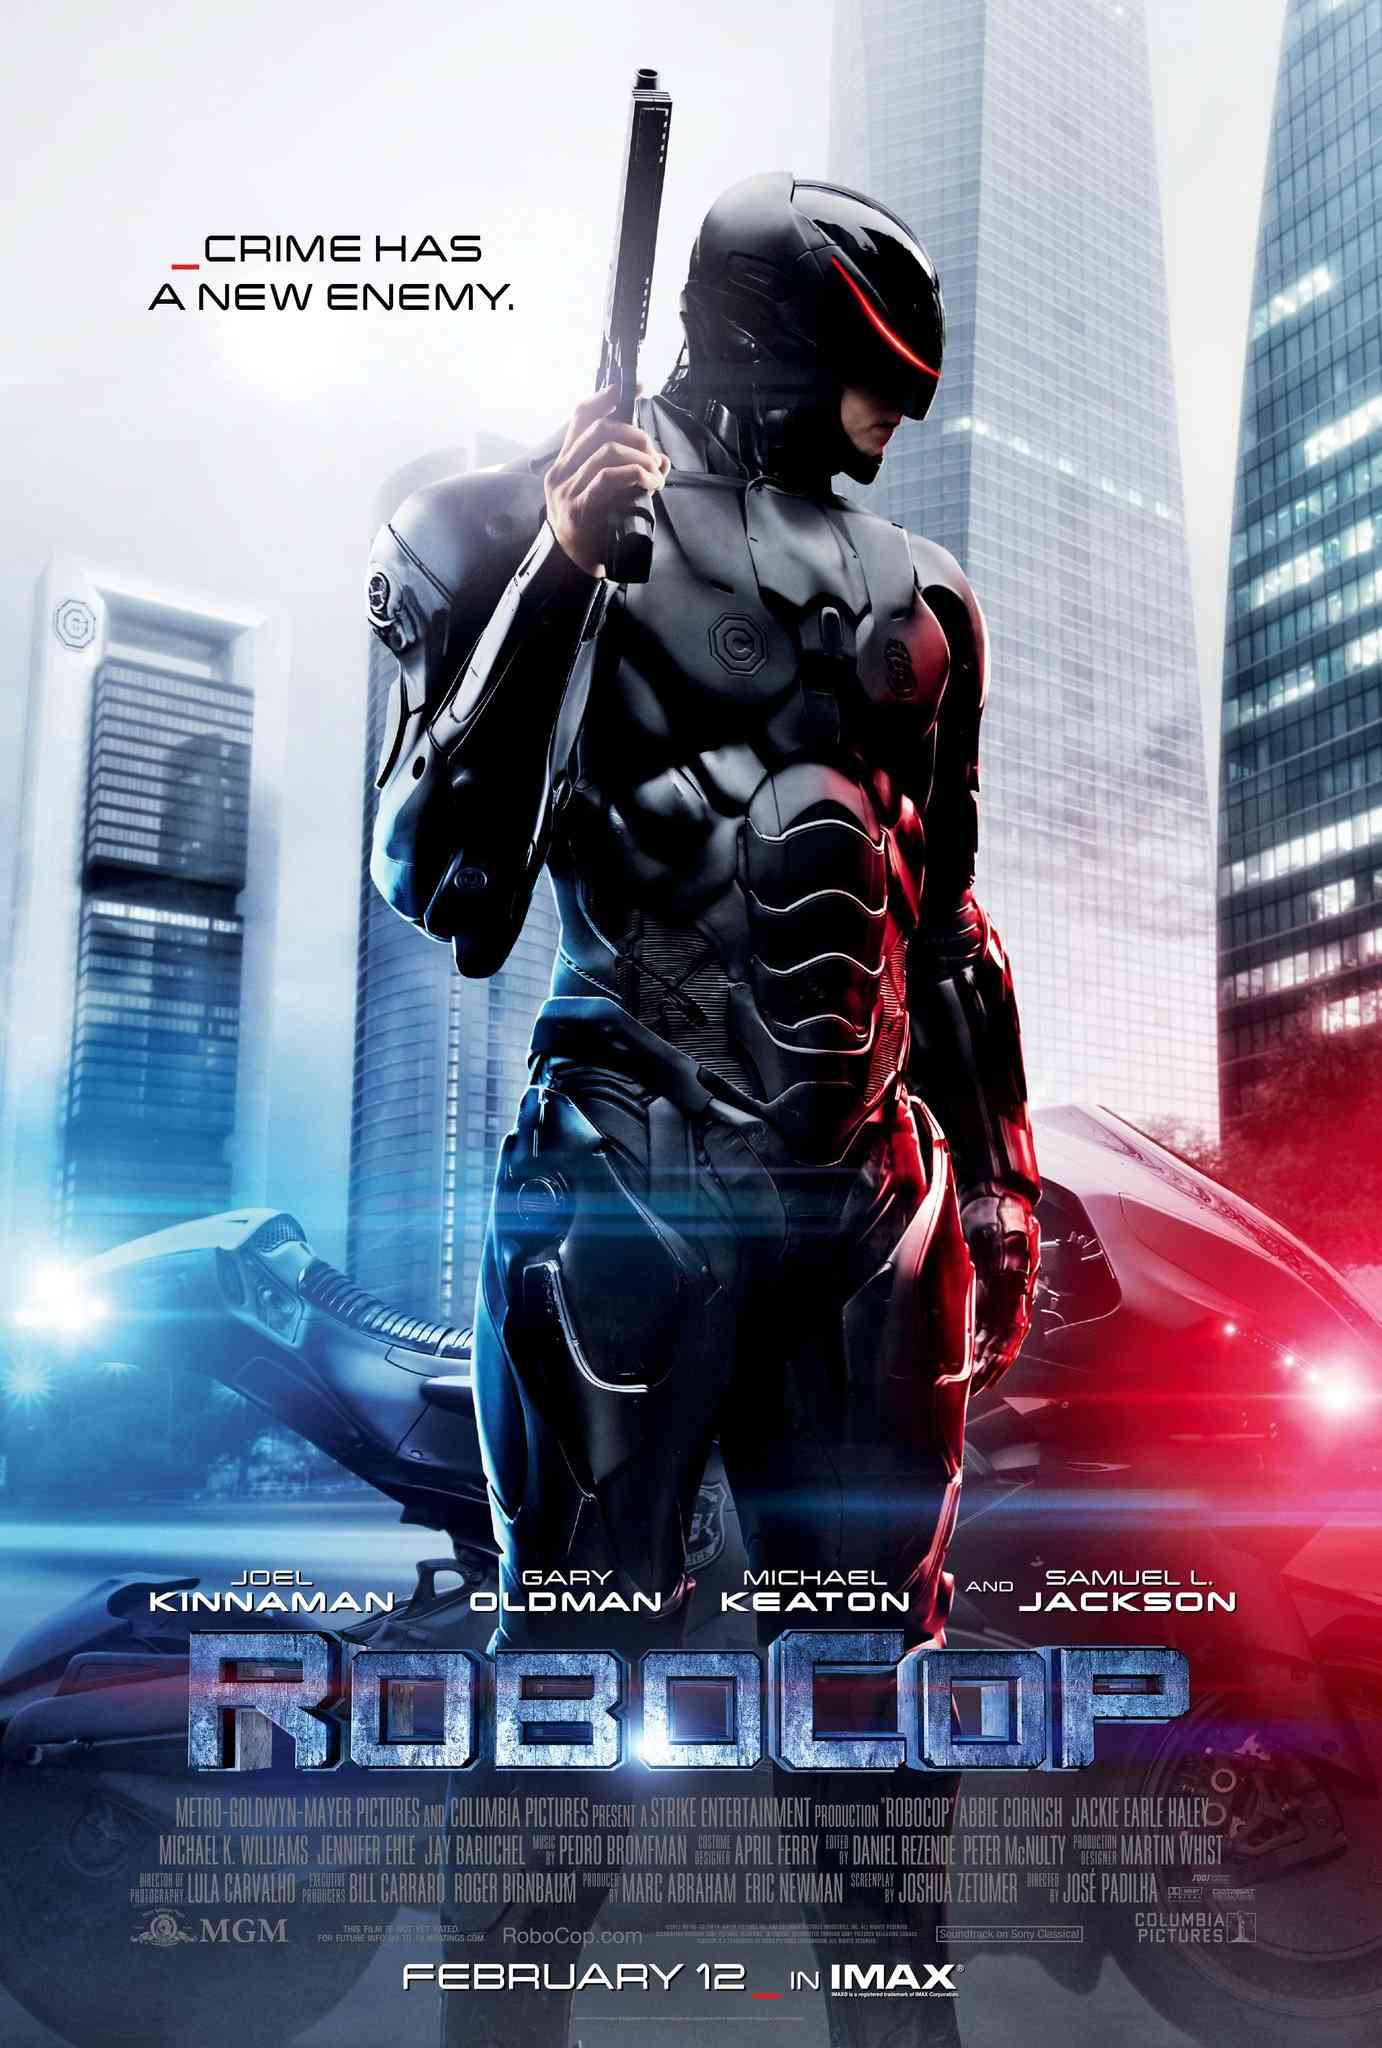 FULL MOVIE: Robocop (2014) [Action]